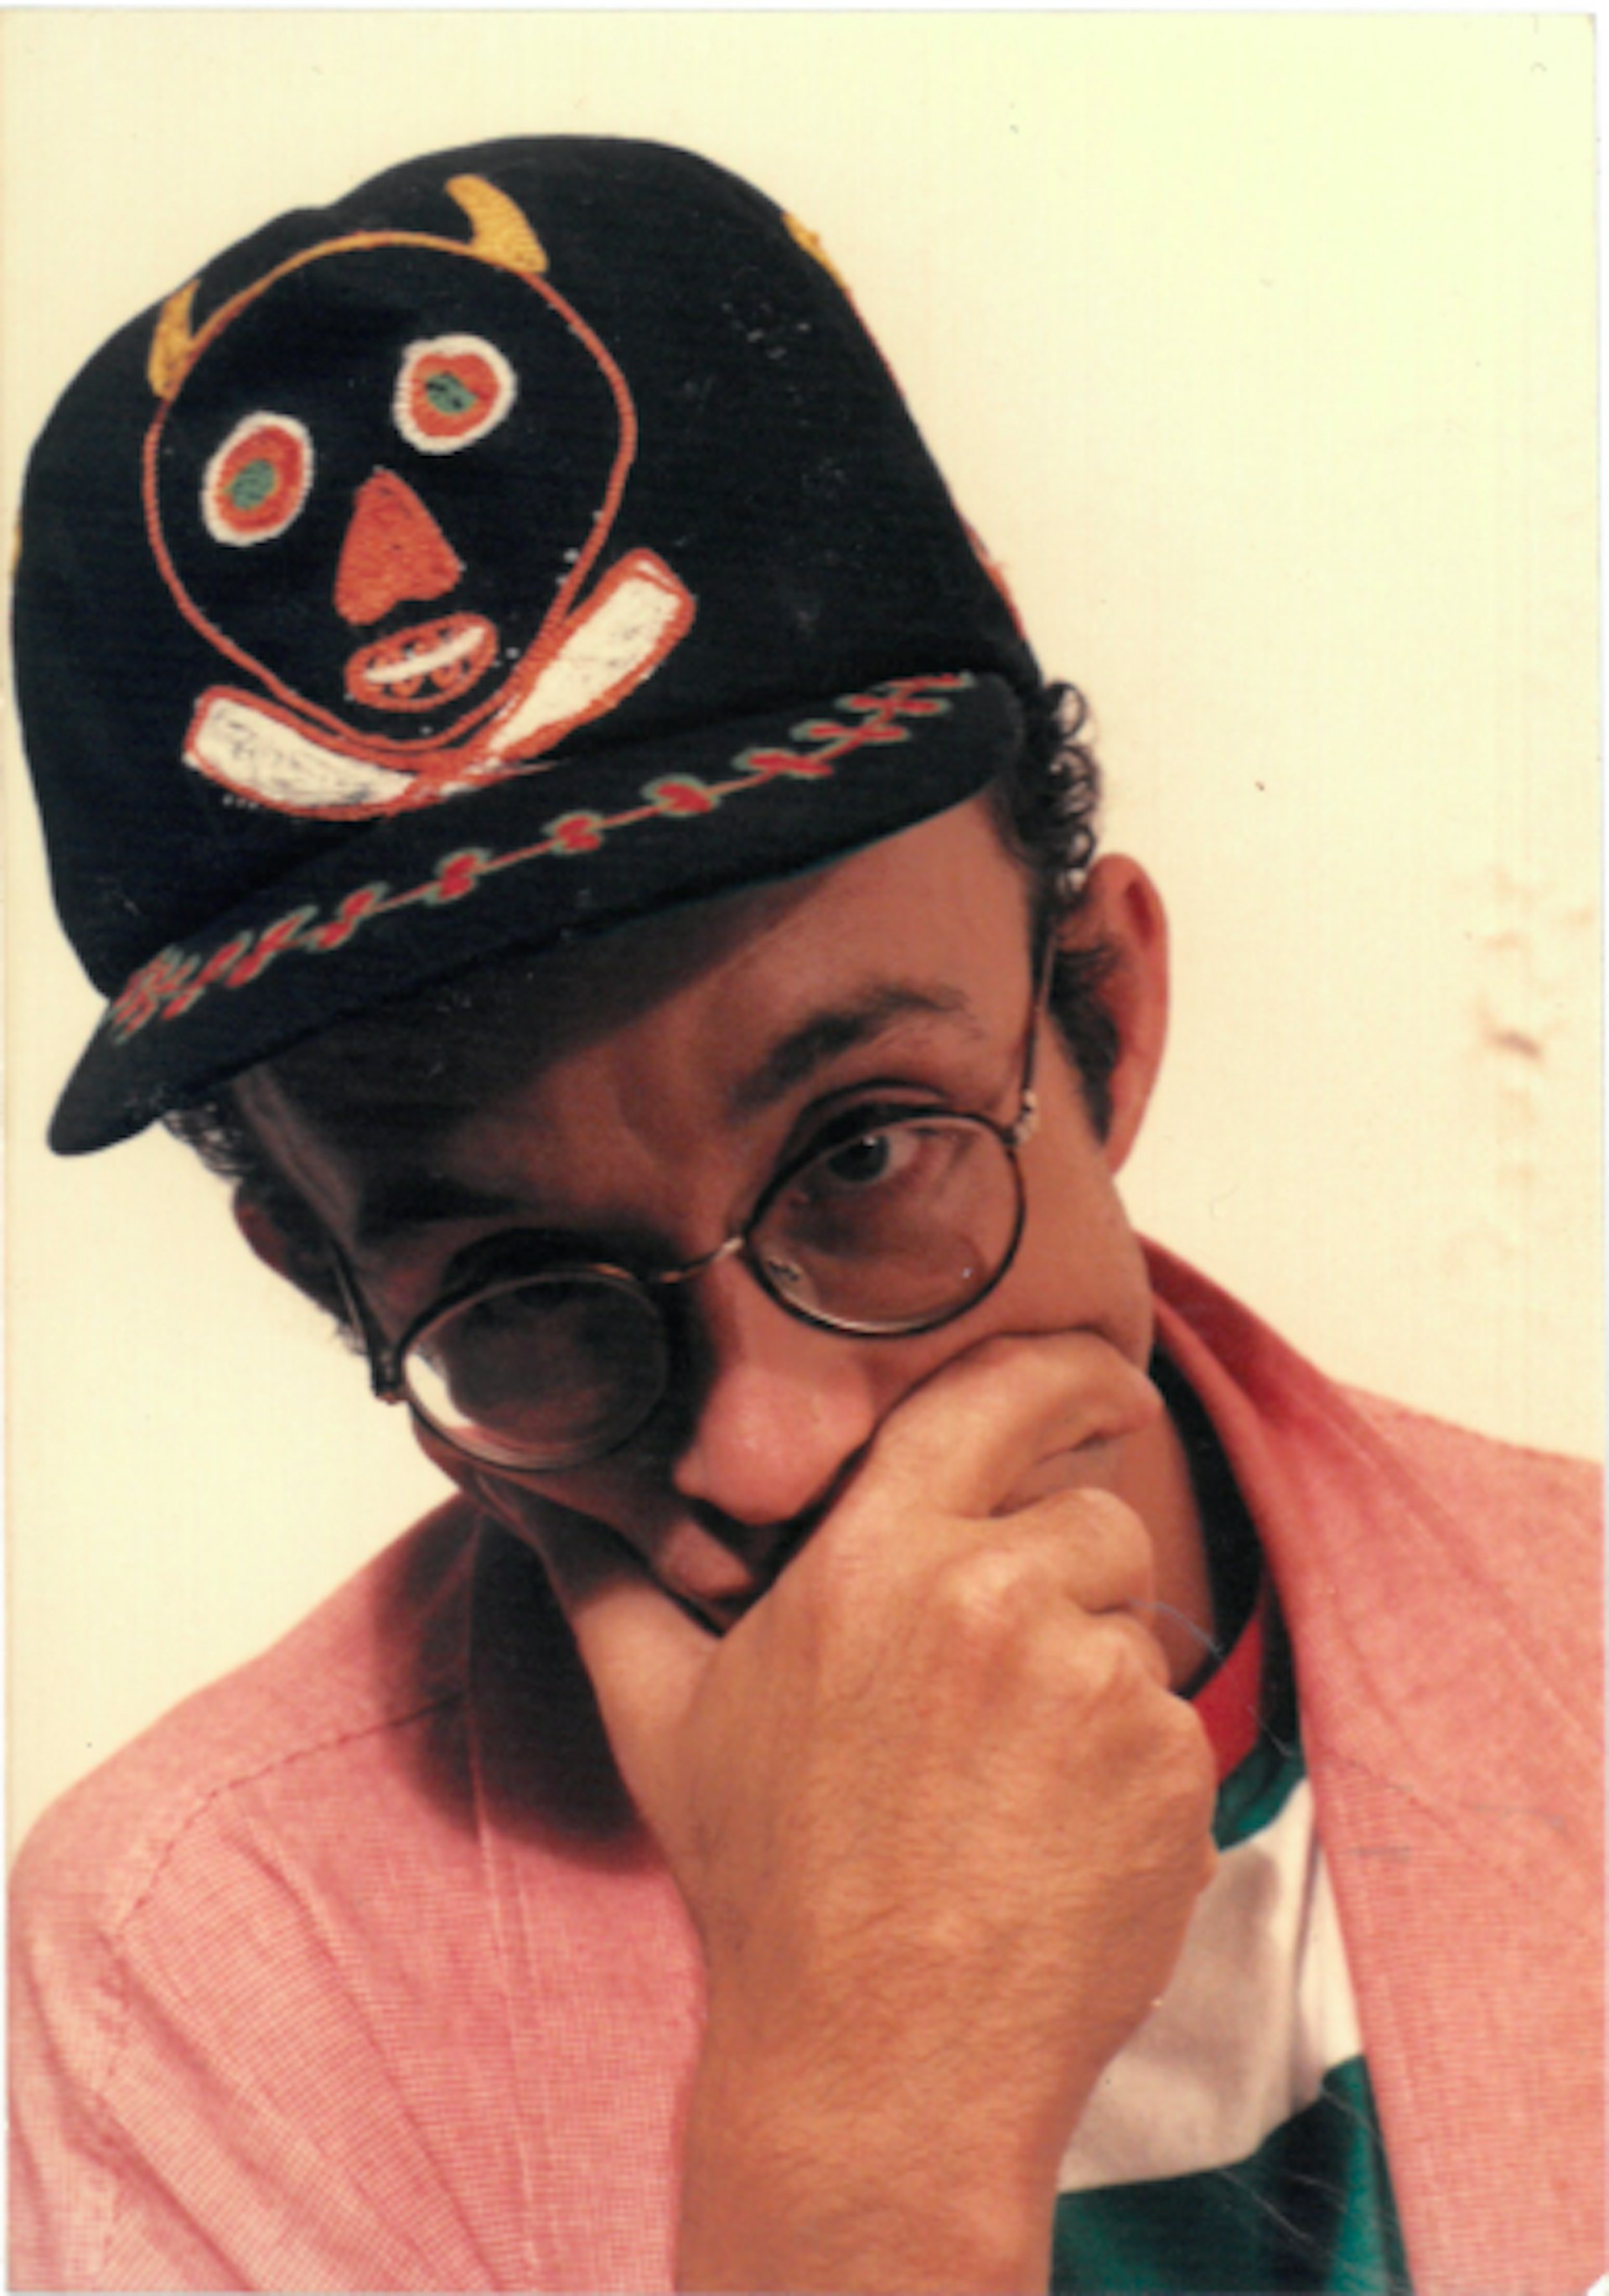 Keith Haring in Devil Clayton Cap